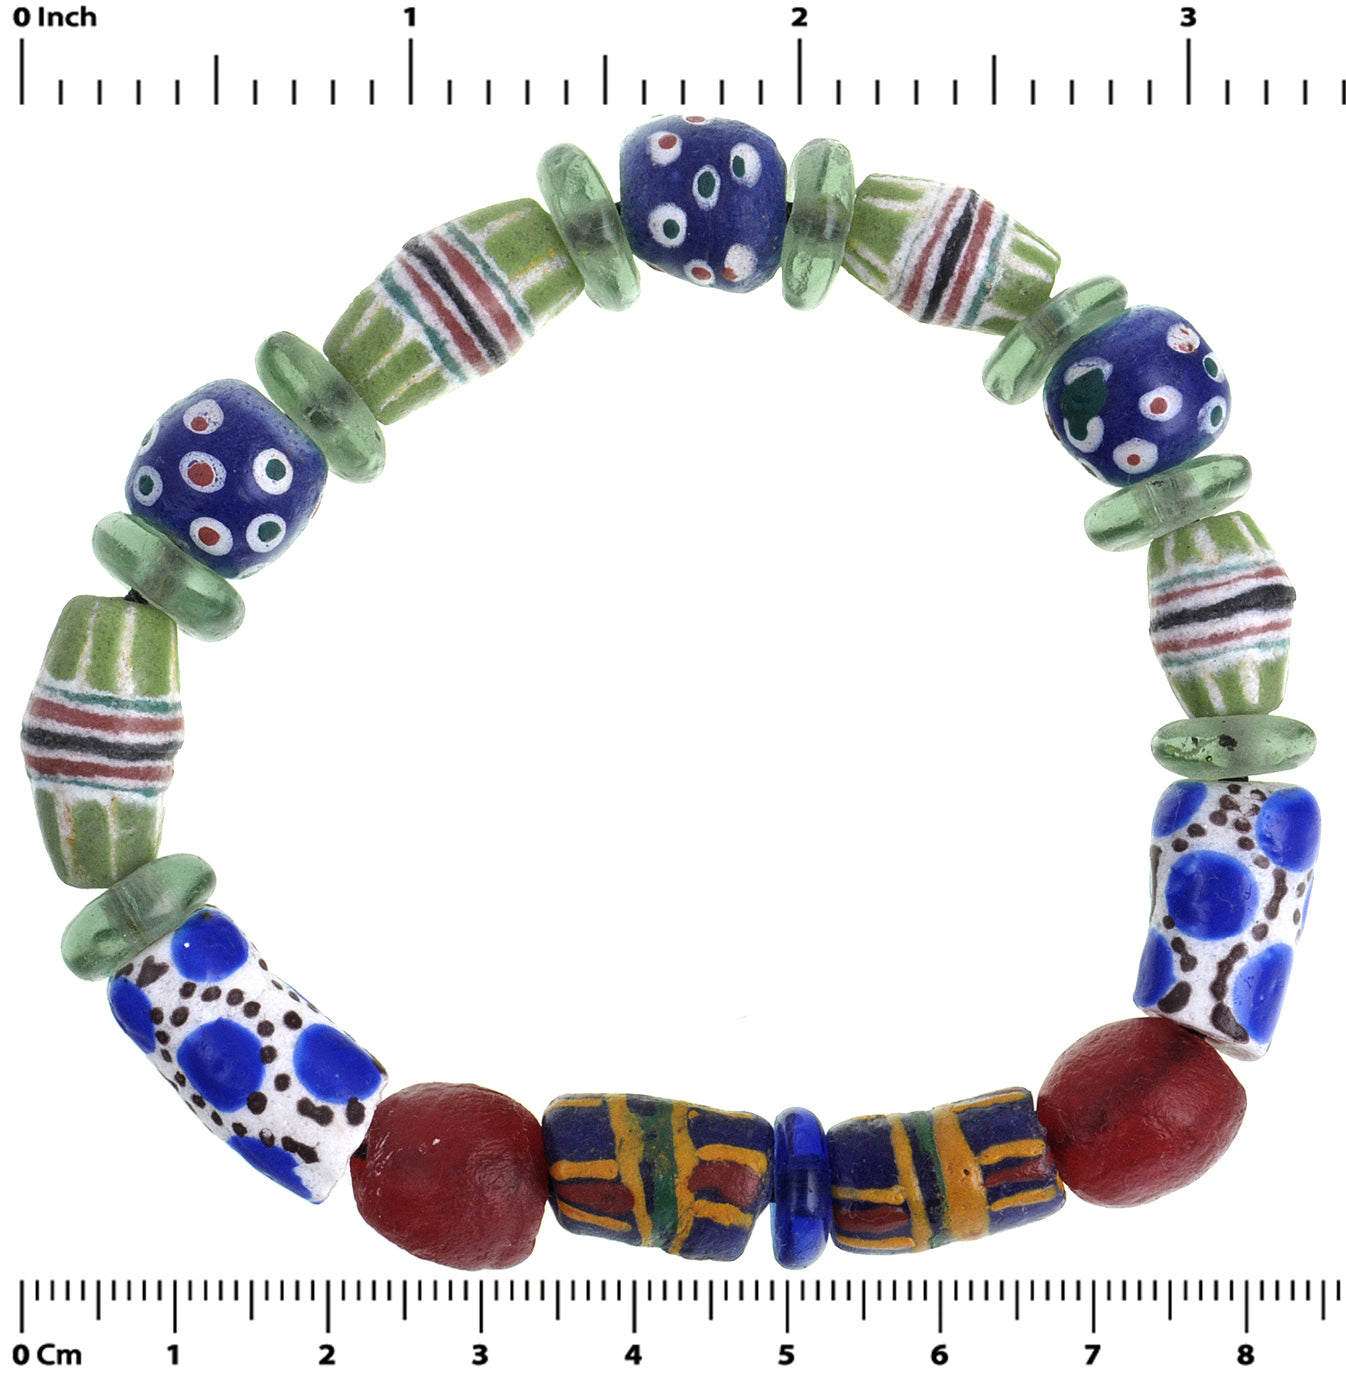 Handmade beads recycled glass powder Krobo African trade ceremonial bracelet - Tribalgh